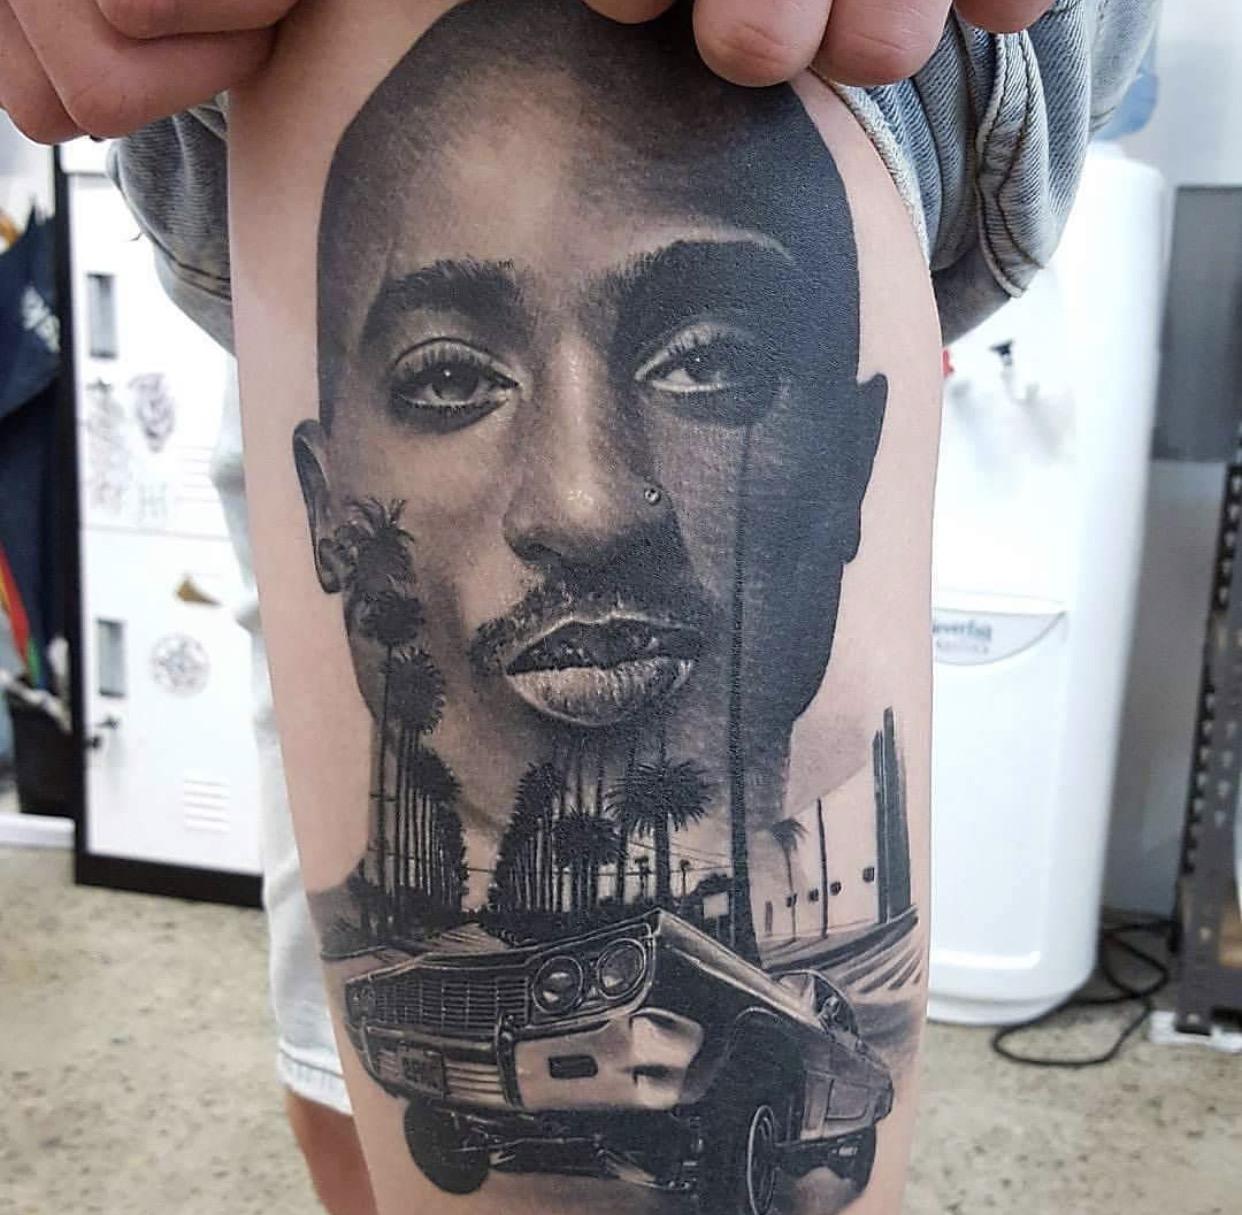 Tupac-Tattoo-Thug-Life-Eric-Blair – What Would Krit Do